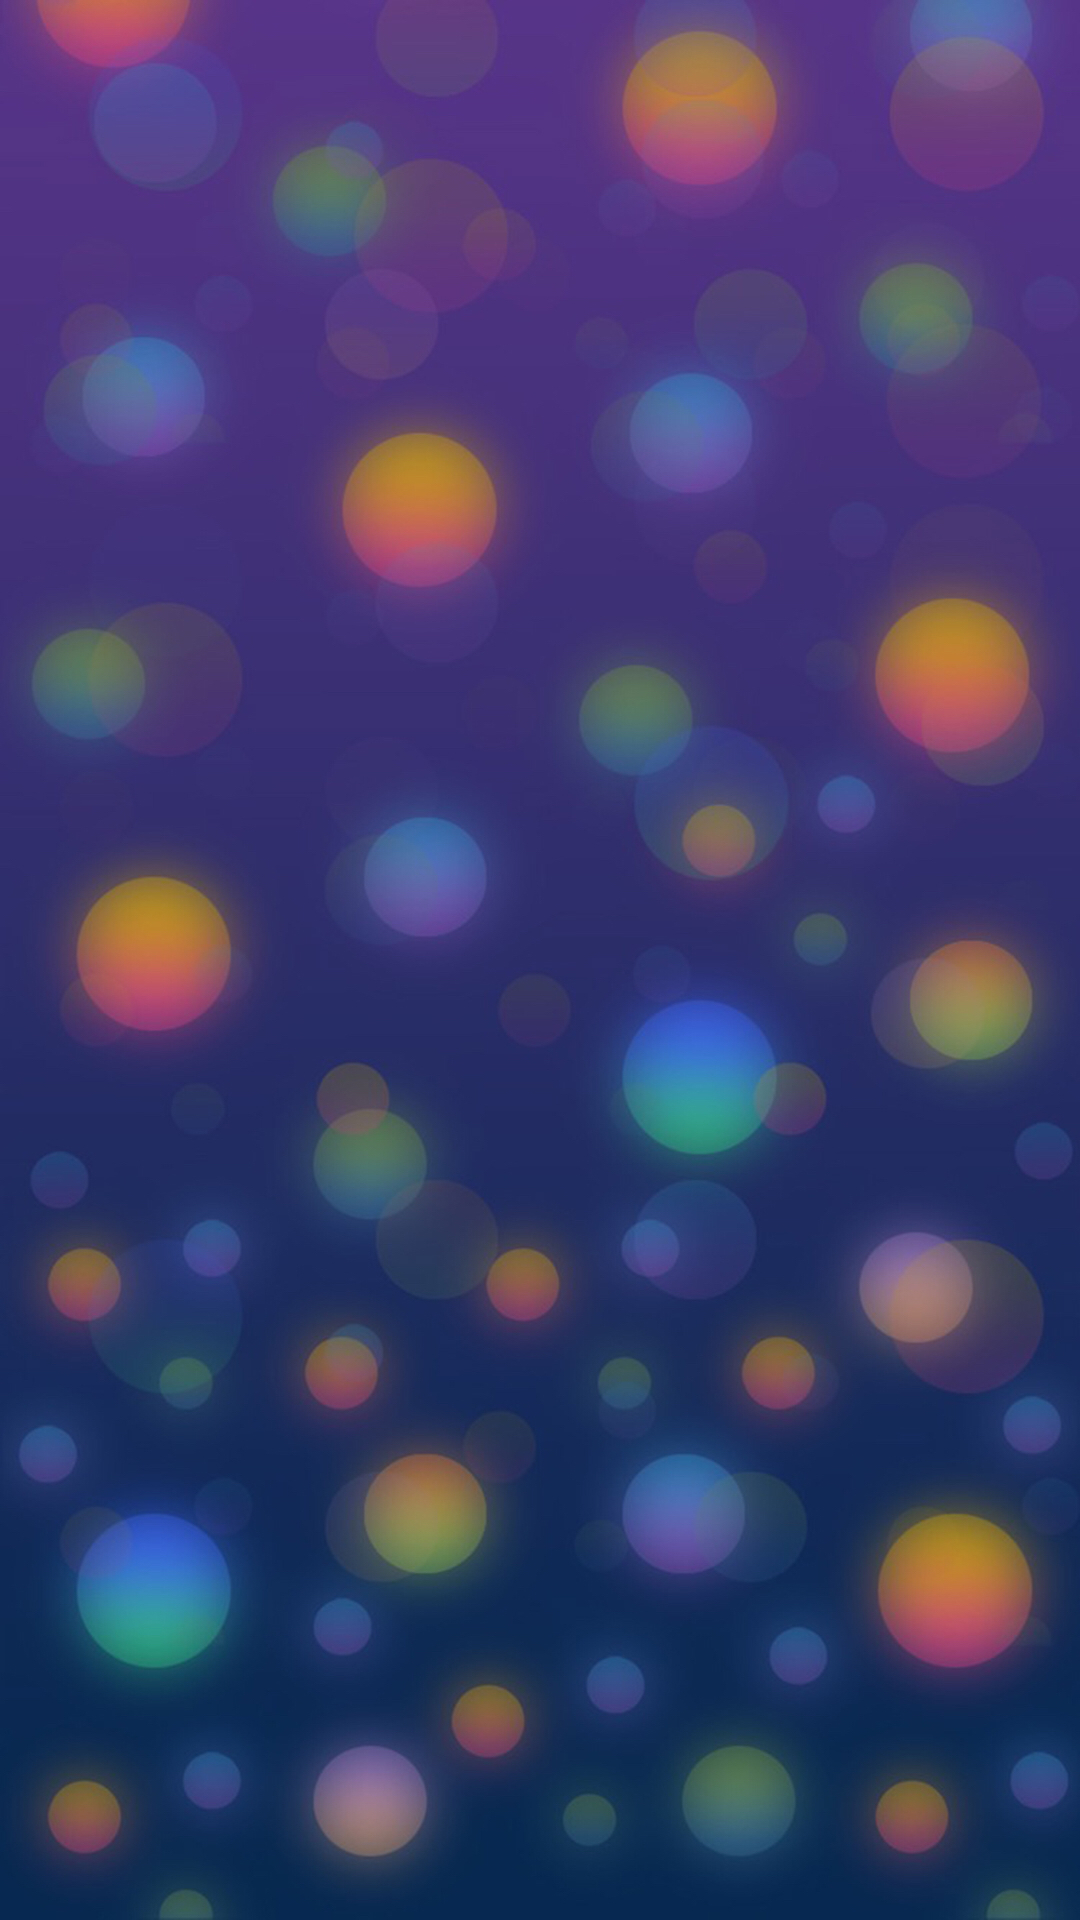 iphone7plus wallpaper,blue,violet,purple,light,pattern